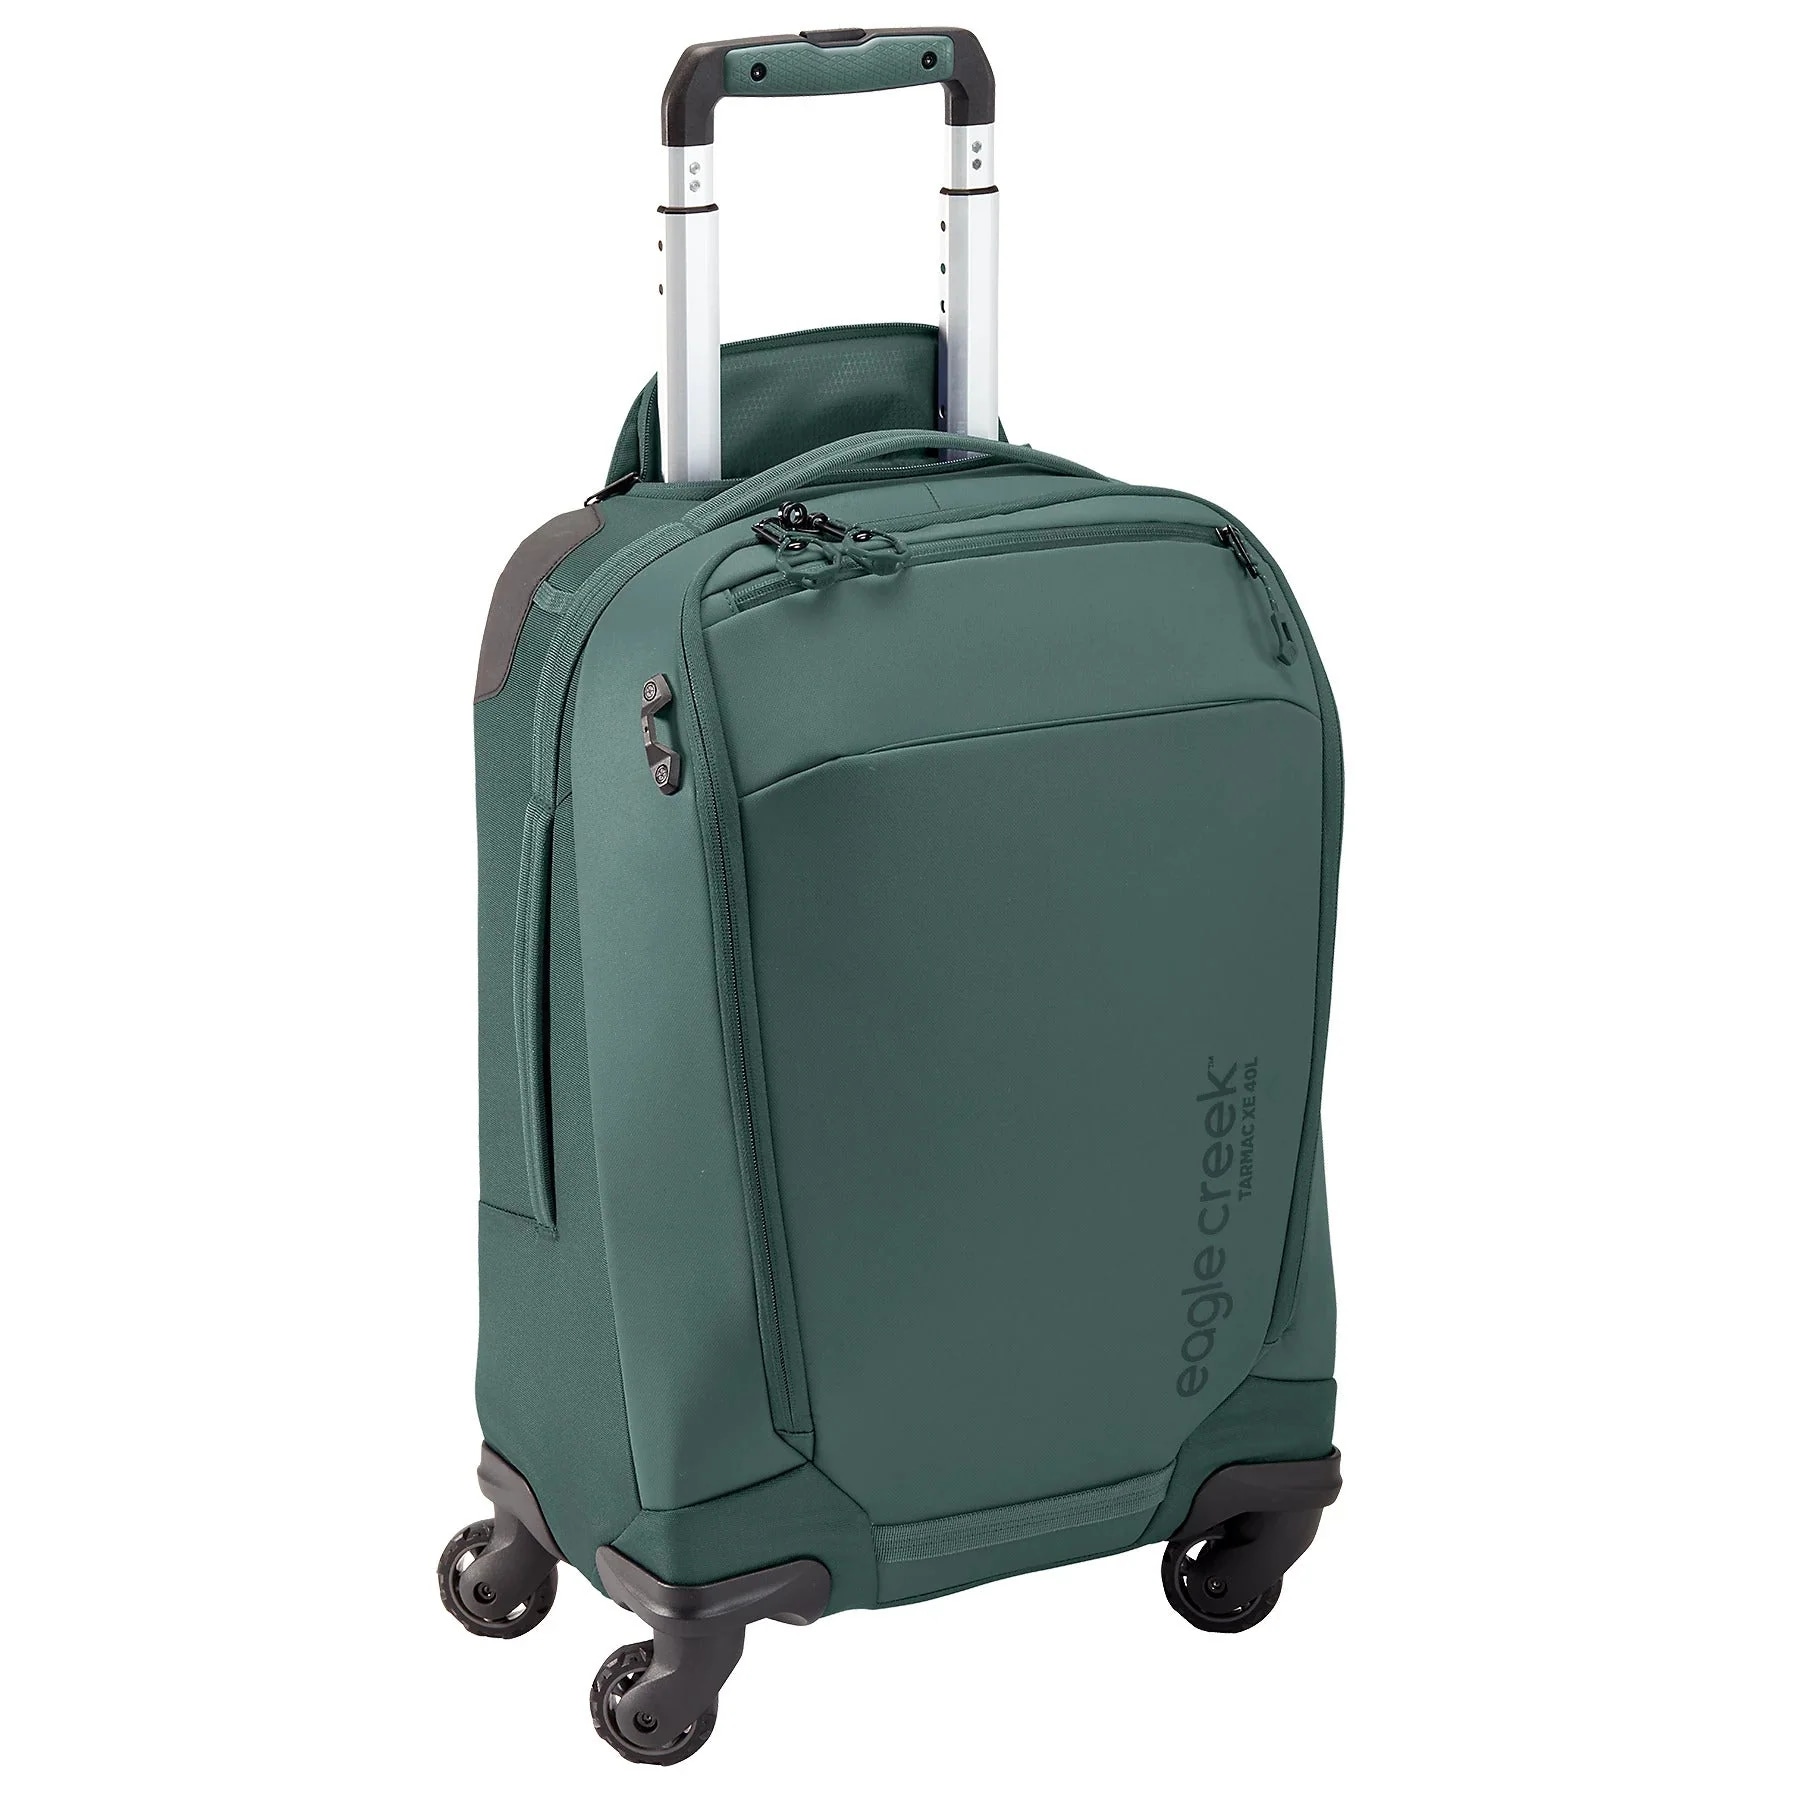 Tarmac XE 4-Wheel 22" Carry On Luggage